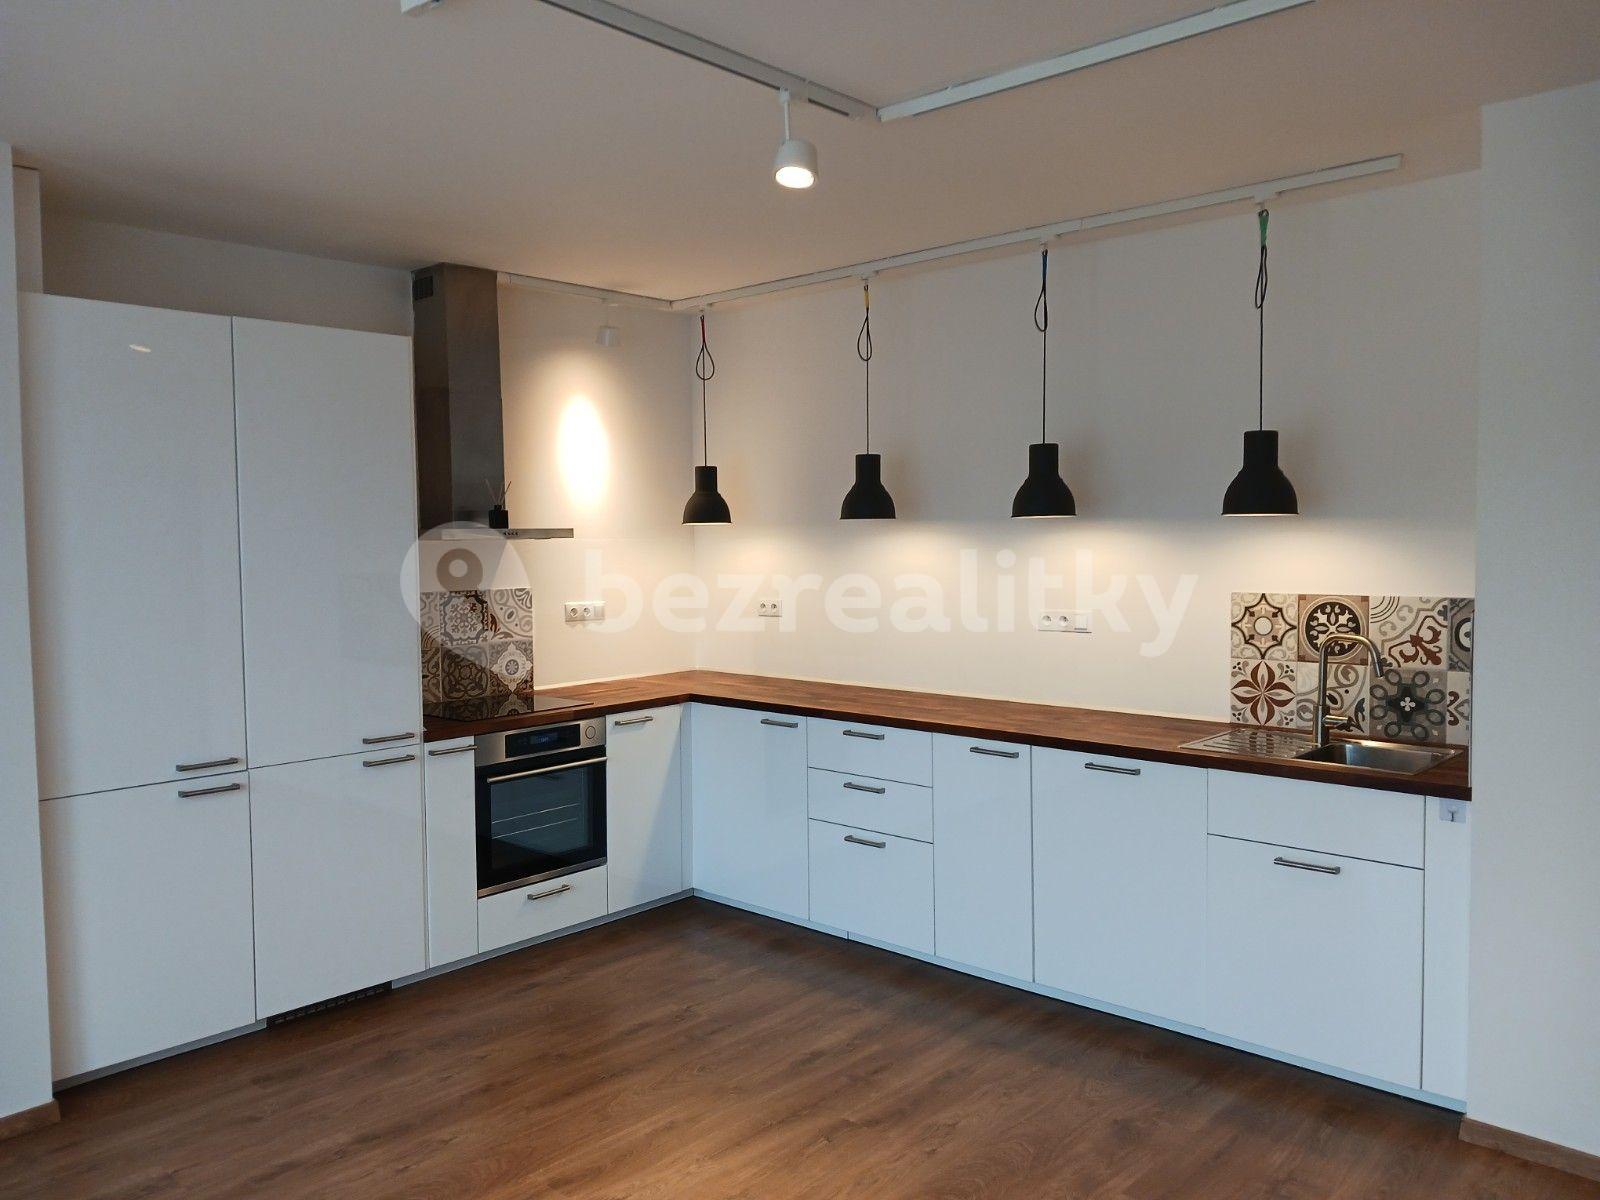 3 bedroom with open-plan kitchen flat for sale, 123 m², Barvitiova, Prague, Prague